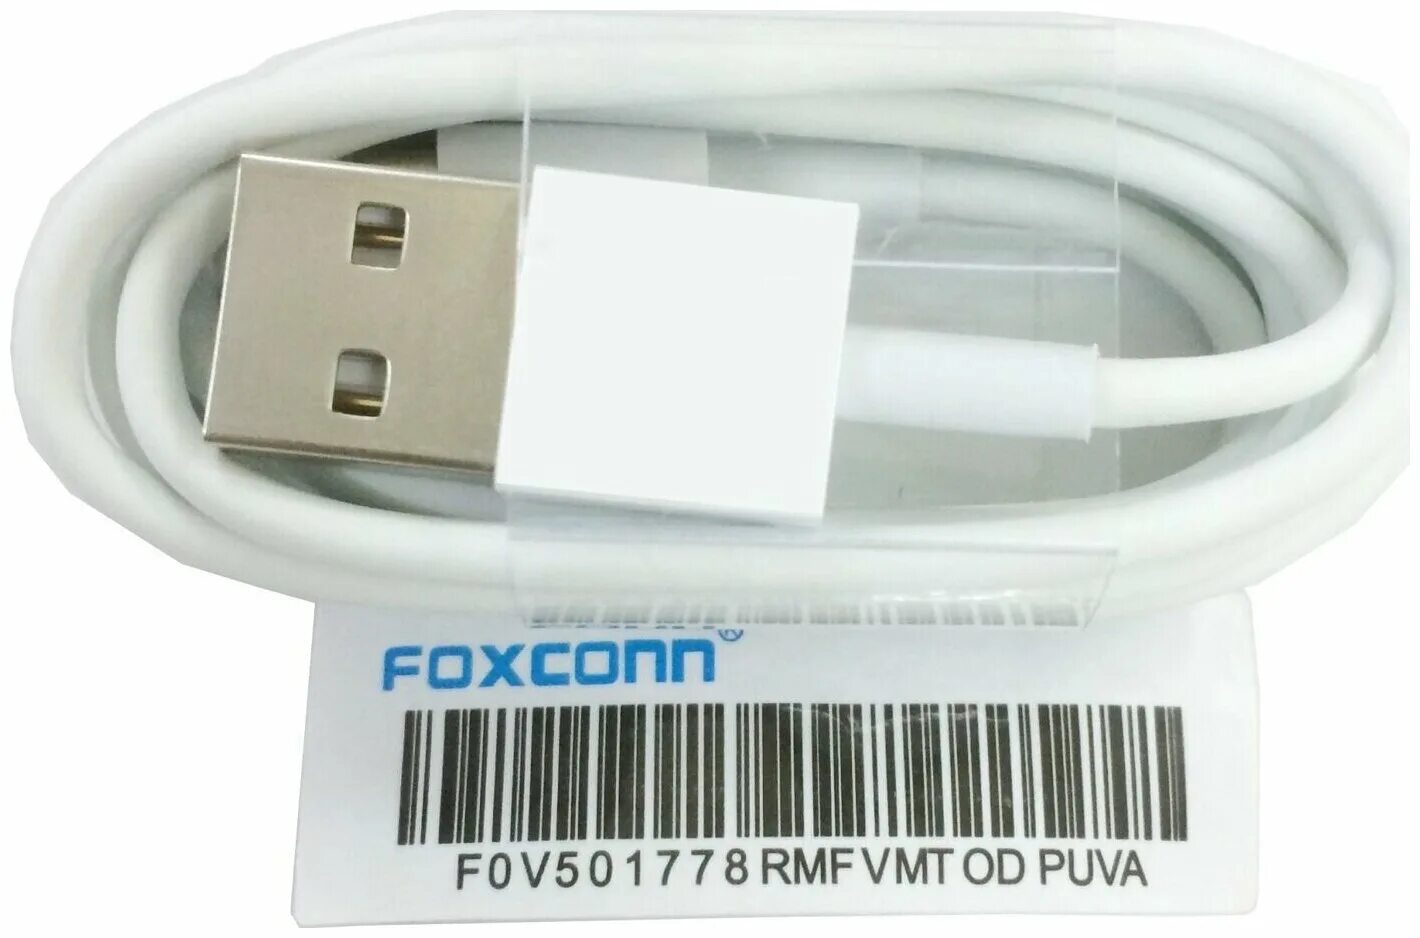 Usb lightning оригинал. Кабель USB Lightning Foxconn. Кабель USB - Lightning Apple iphone Original 2.0 м White 627448. Кабель Foxconn Lightning 1 метр USB. Кабель USB для iphone Lightning 8 Pin (1м) 100%.